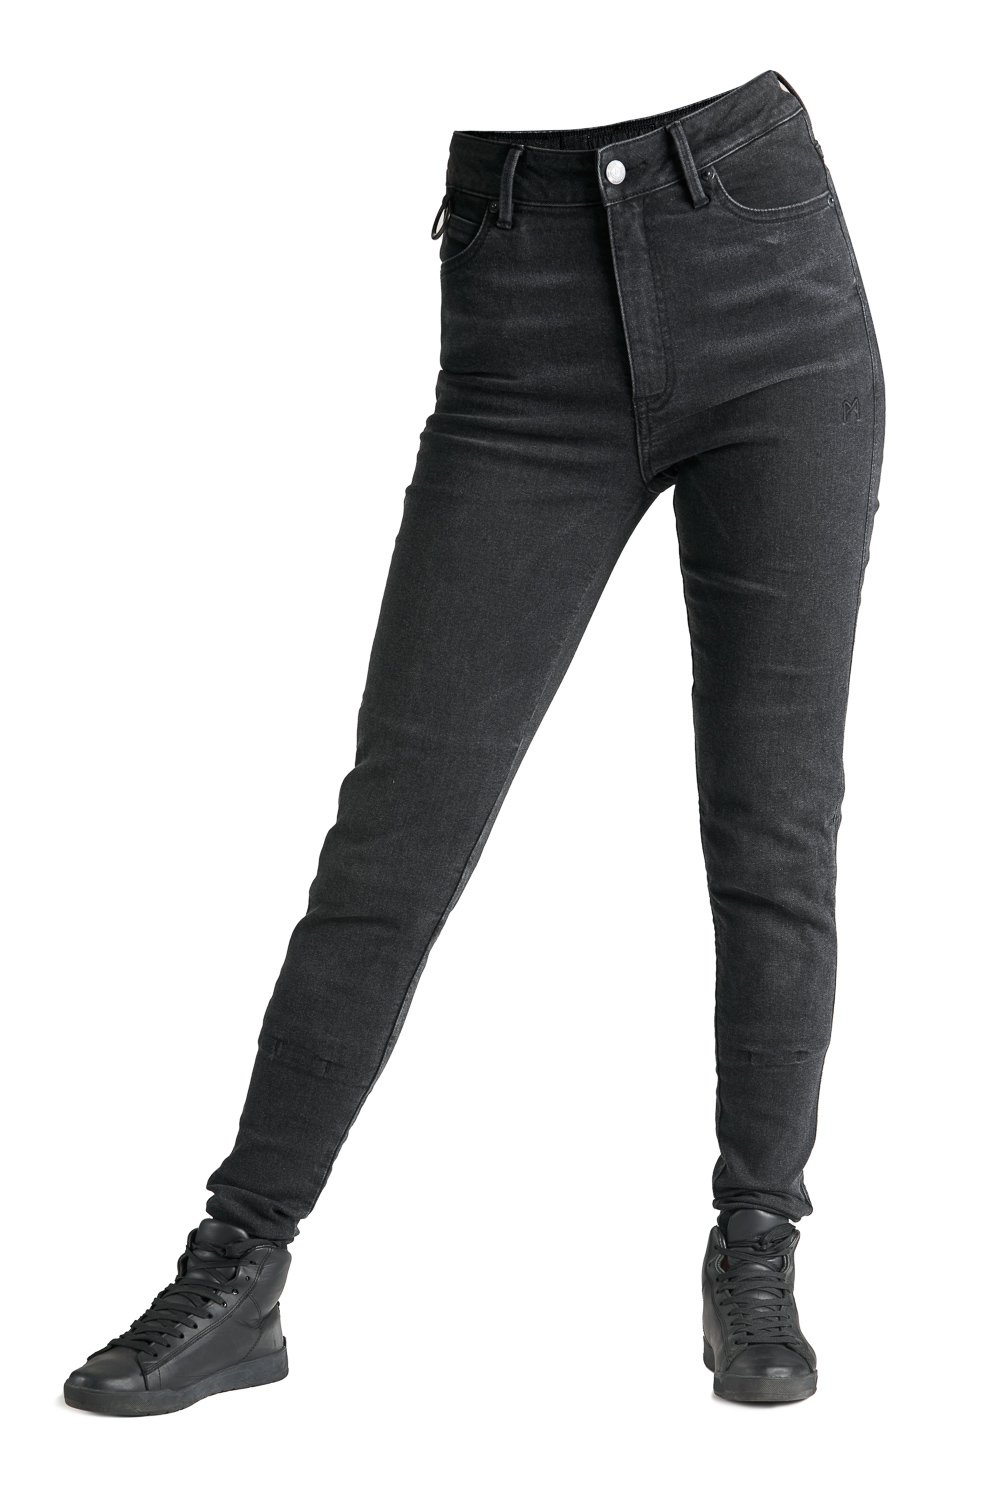 Image of Pando Moto Kusari Cor 01 Women Motorcycle Jeans Skinny-Fit Cordura Talla W31/L32